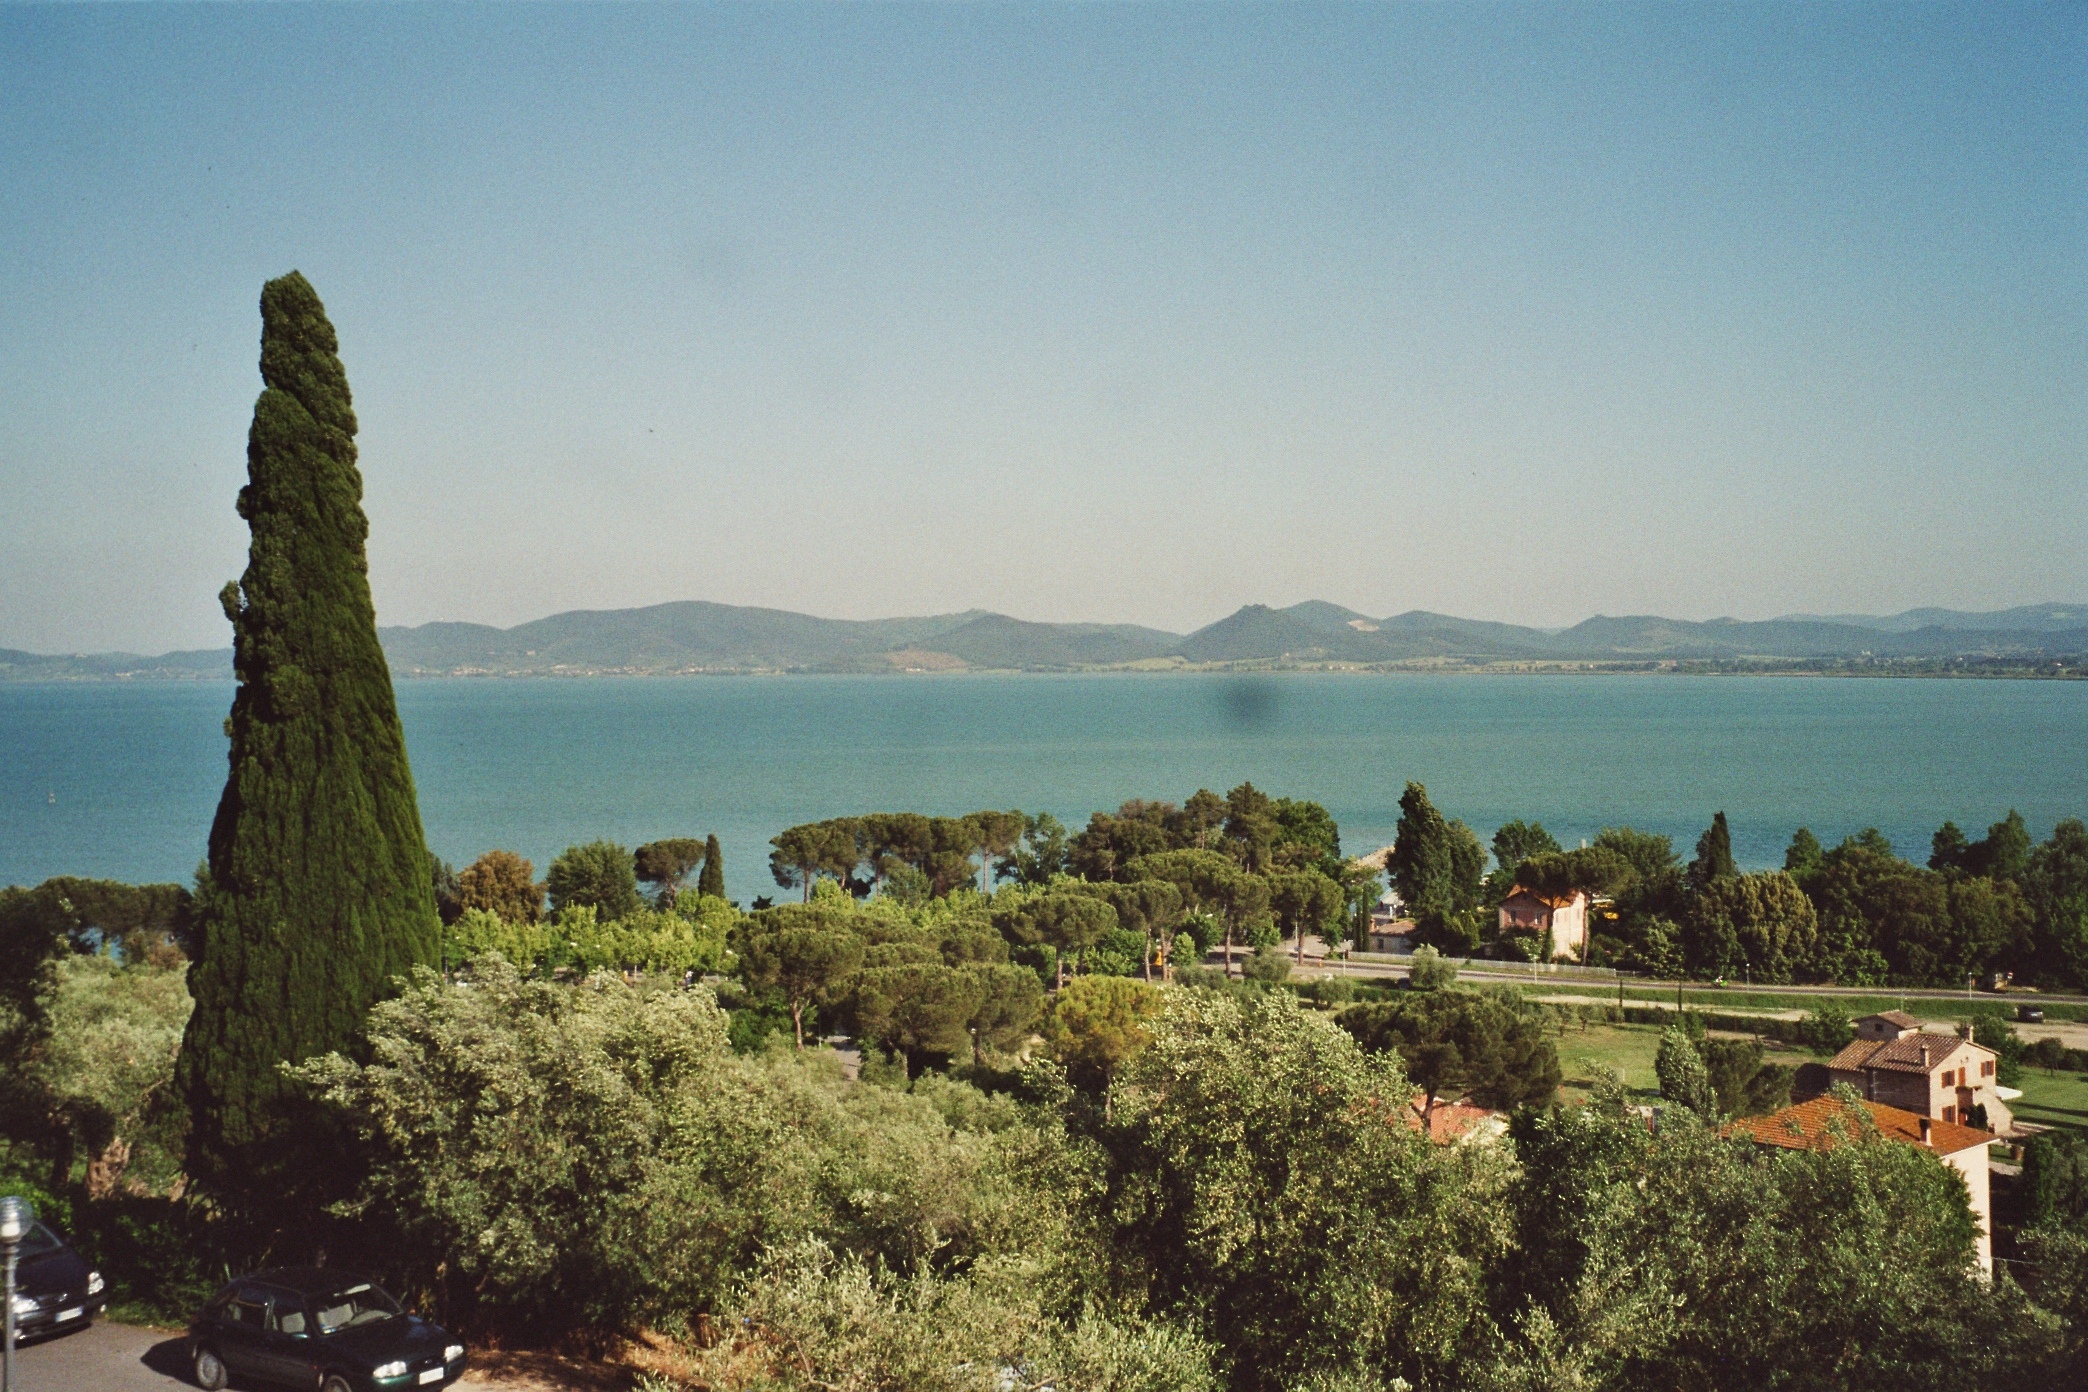 Castiglione del lago
Blick auf den Trasimenischen See